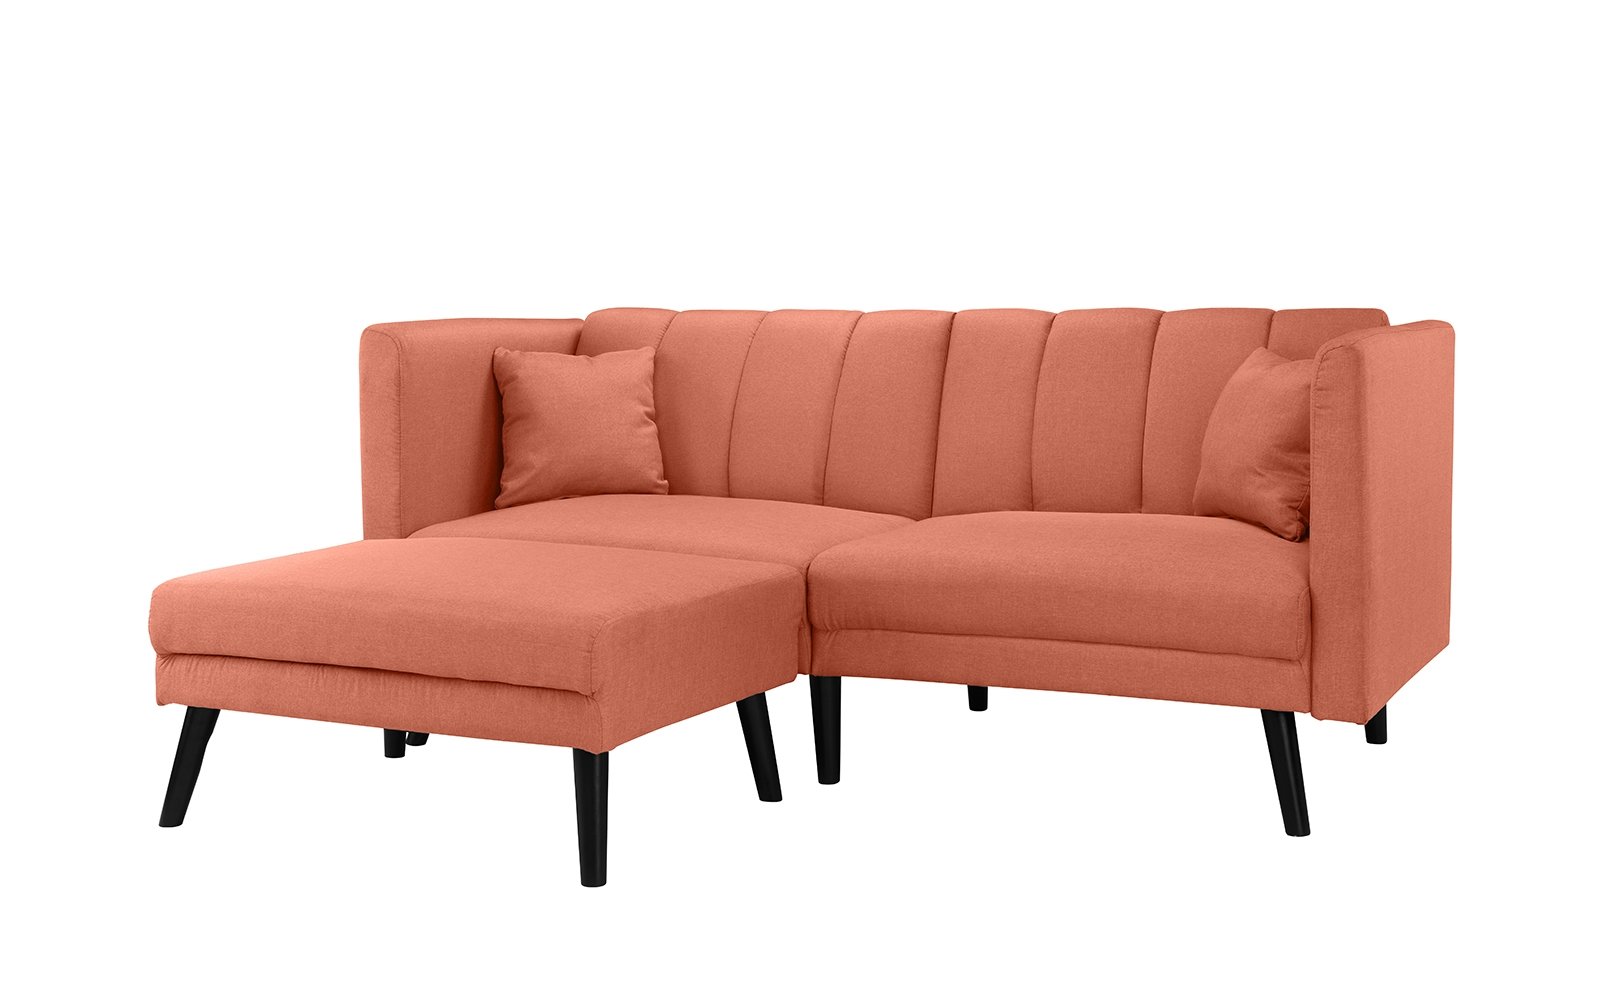 Mid-Century Modern Fabric Futon Sofa Bed, Sleeper, Orange ...